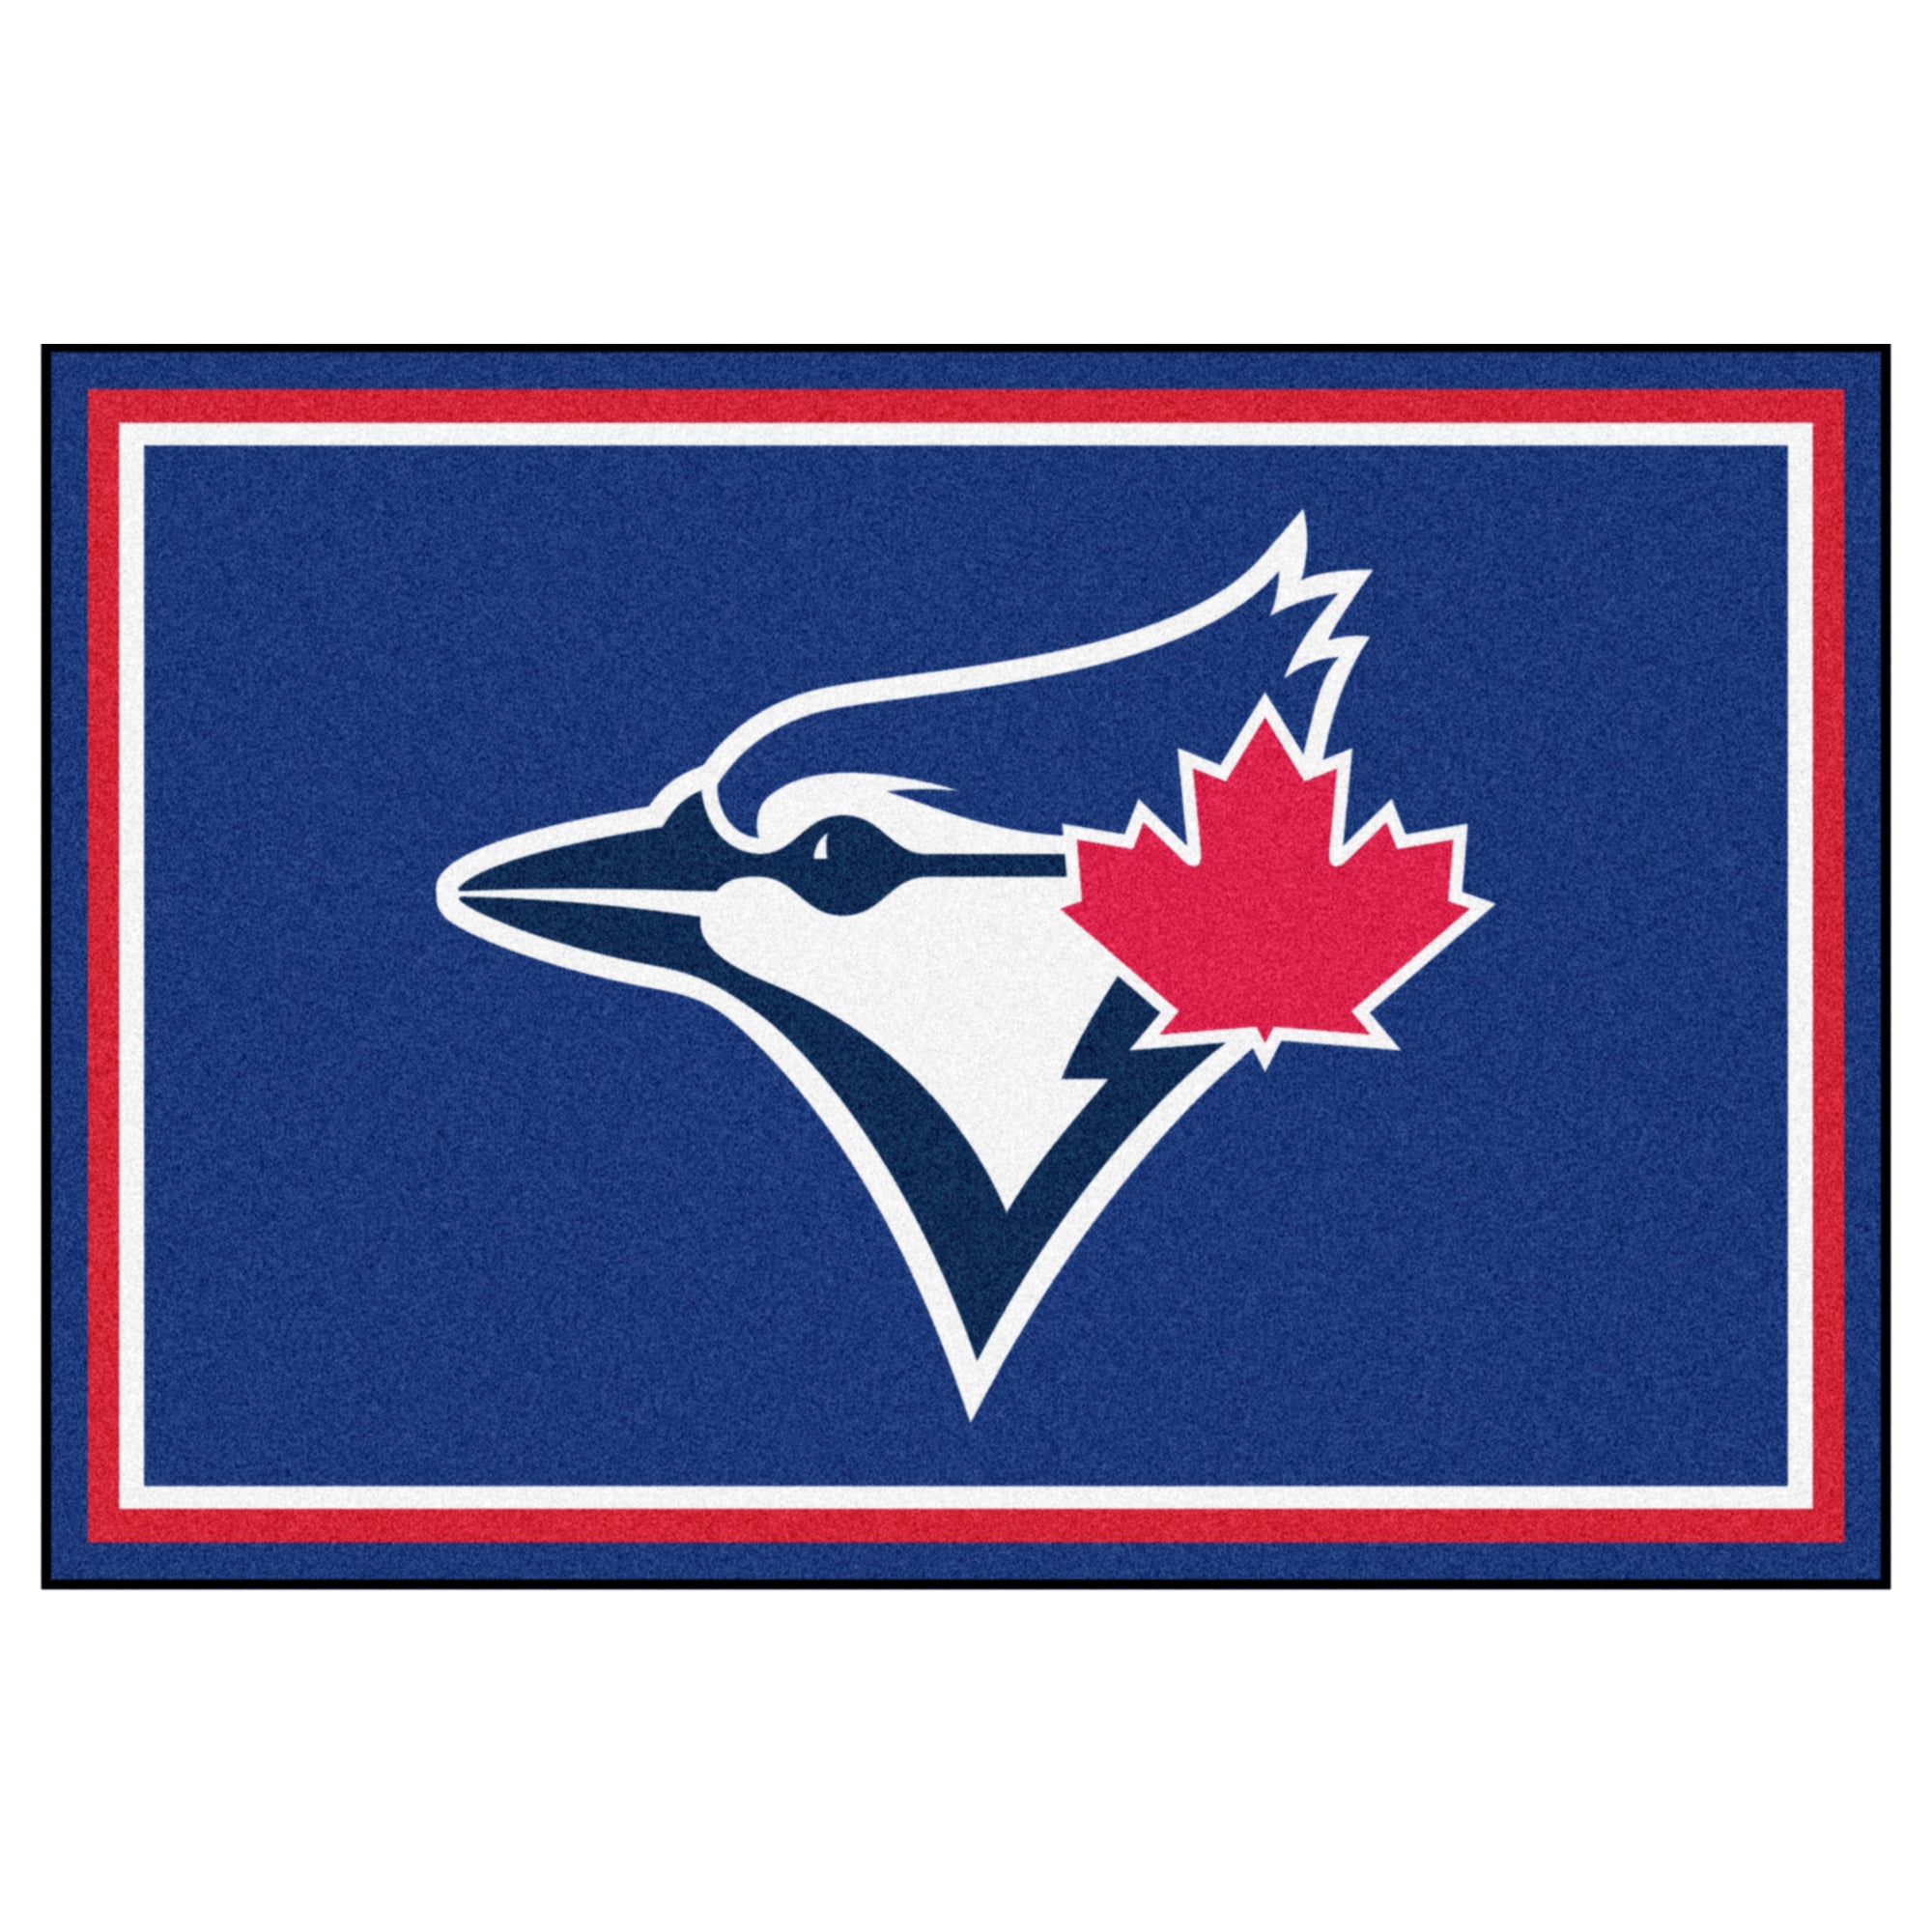 MLB - Toronto Blue Jays 5x8 Rug